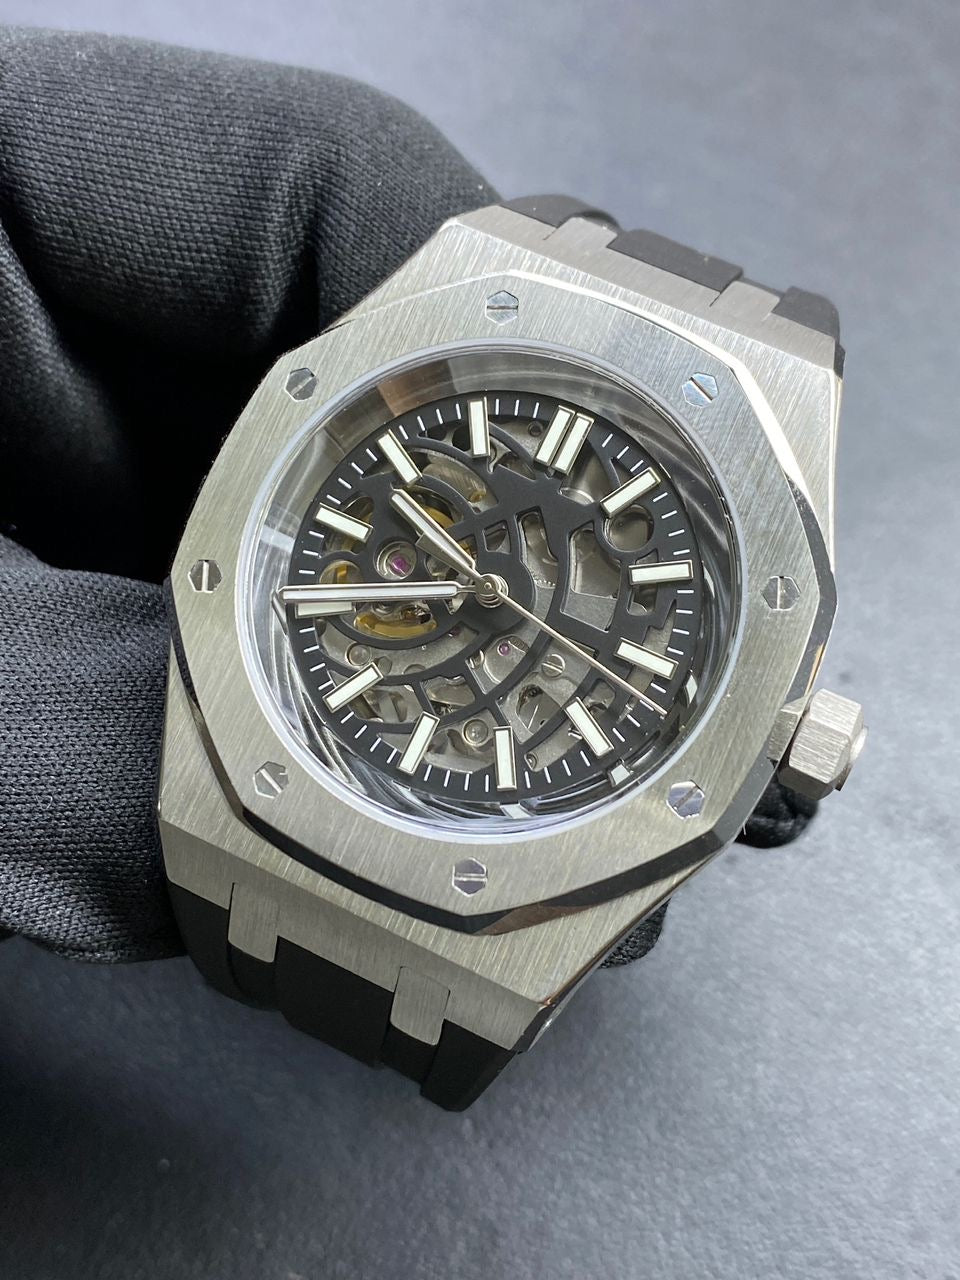 Seiko mod silver Skeleton Royal oak automatic watch with rubber strap